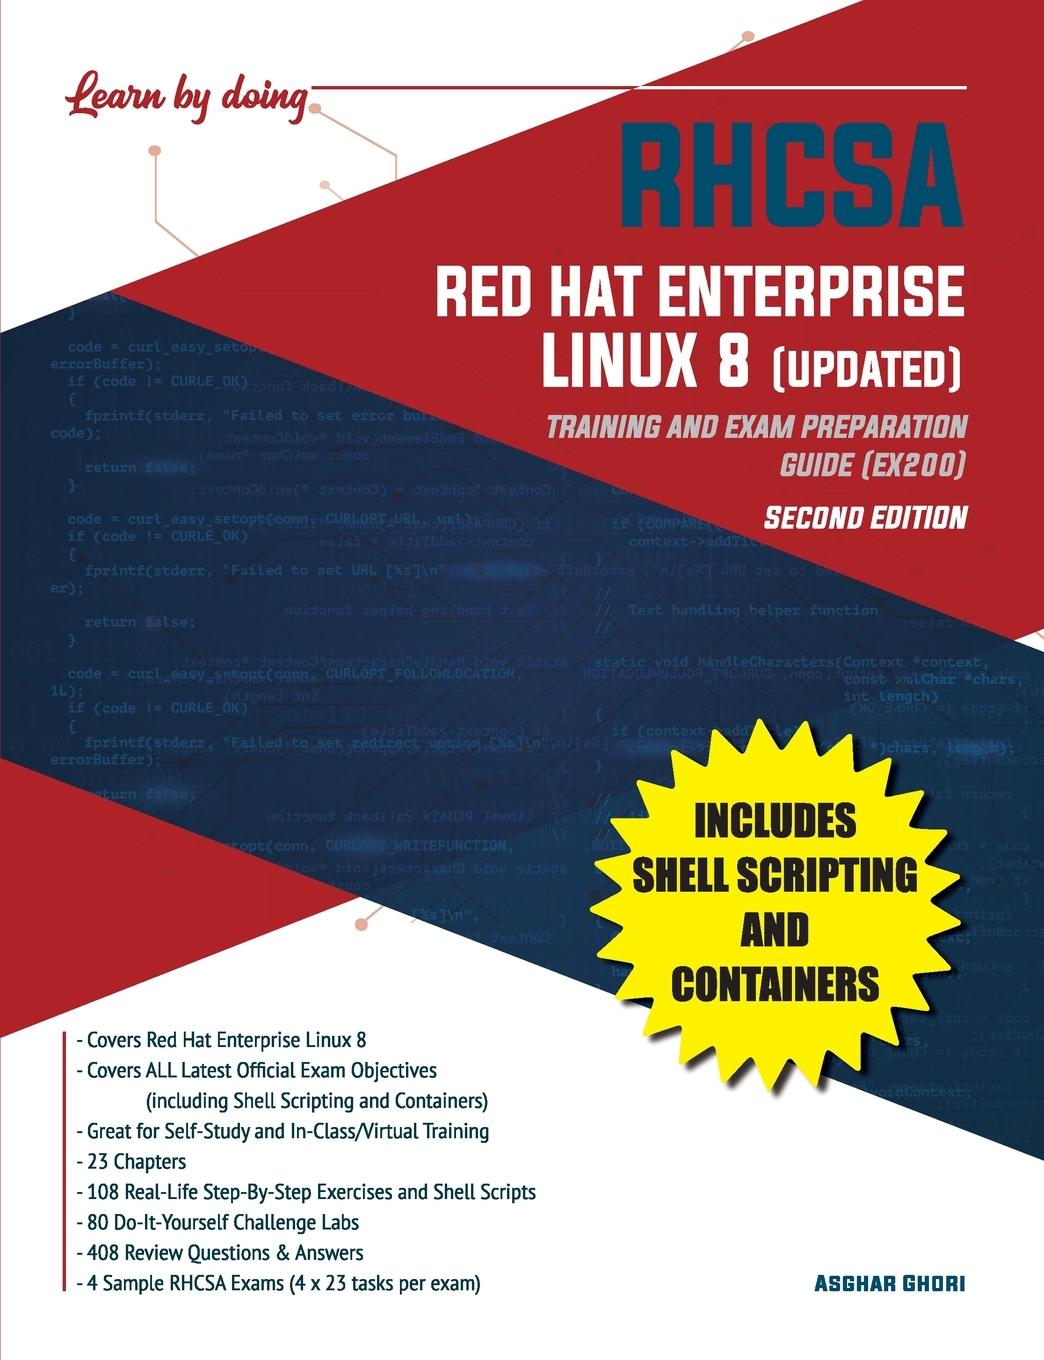 Könyv RHCSA Red Hat Enterprise Linux 8 (UPDATED) 